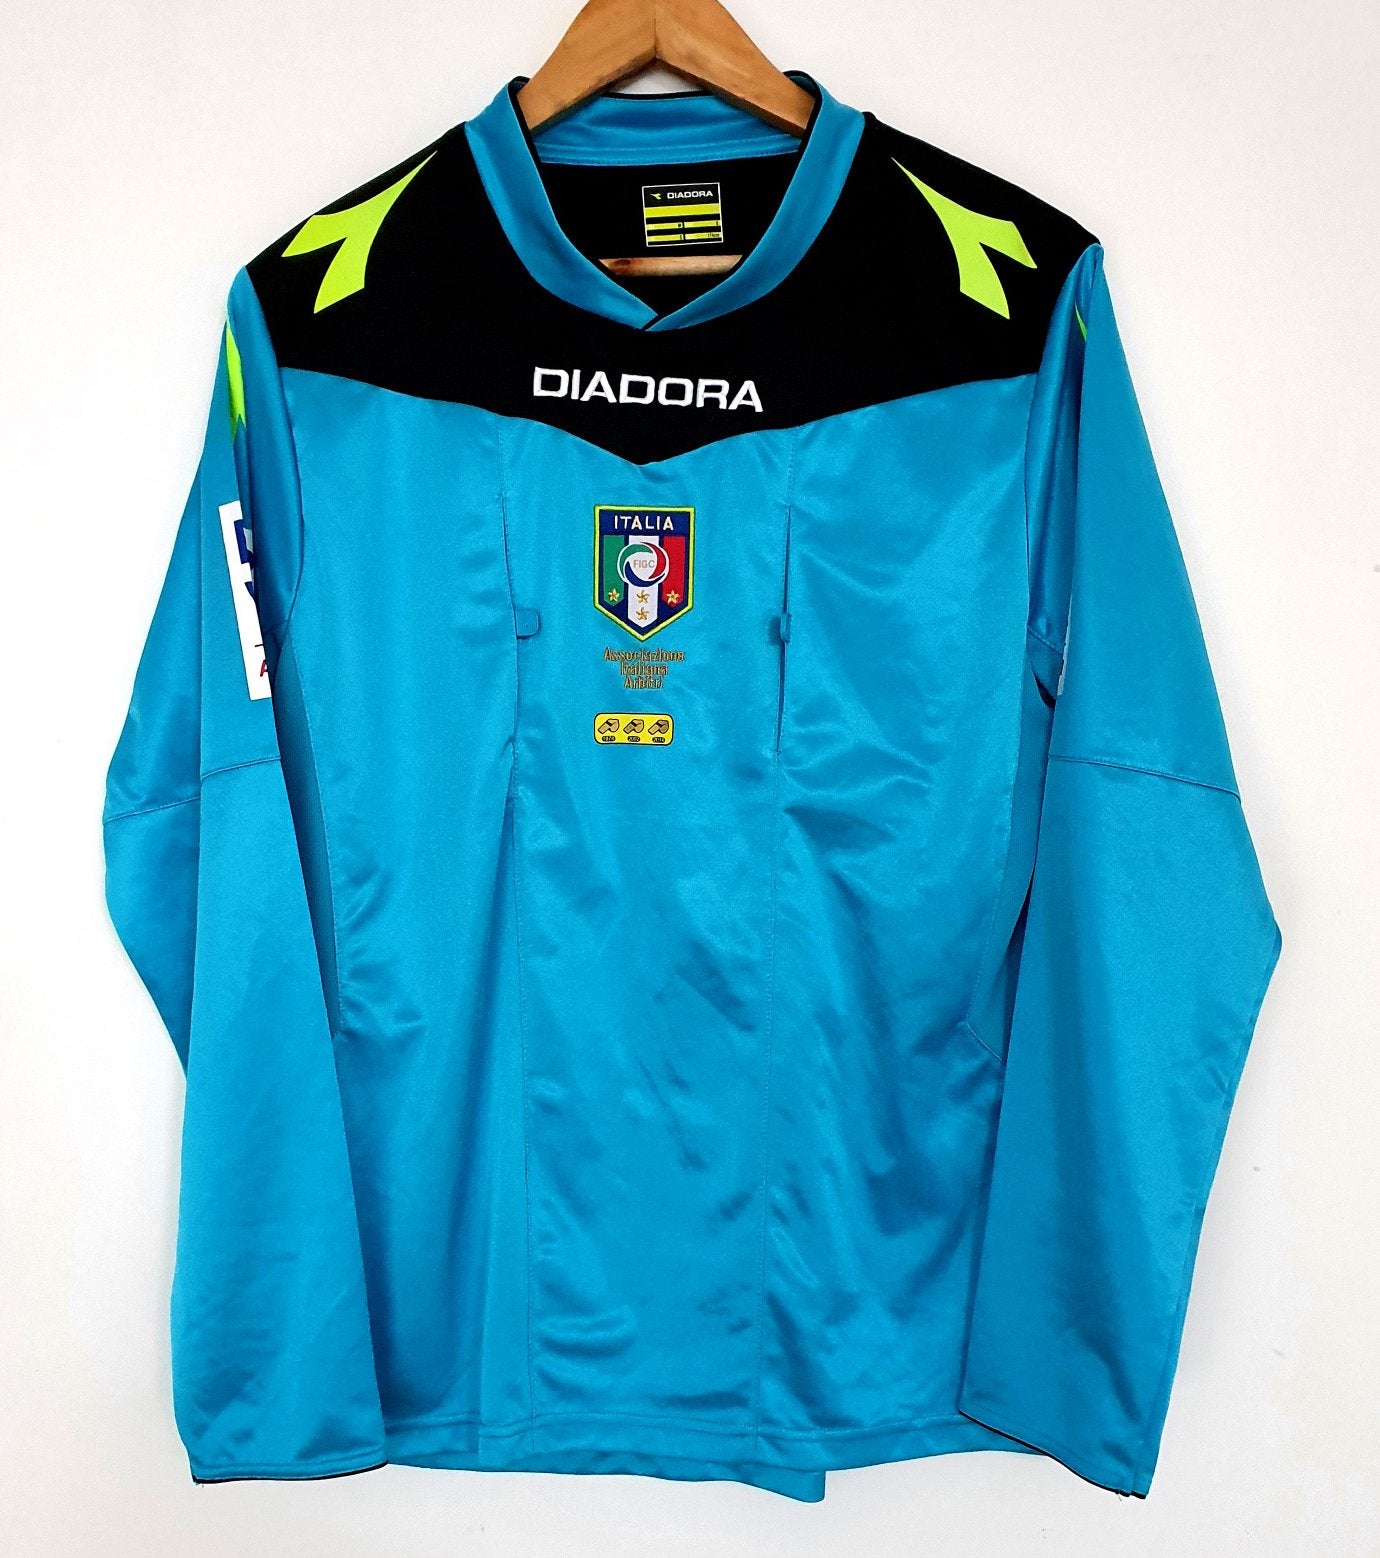 Diadora Italian Serie A Referee's Shirt Small